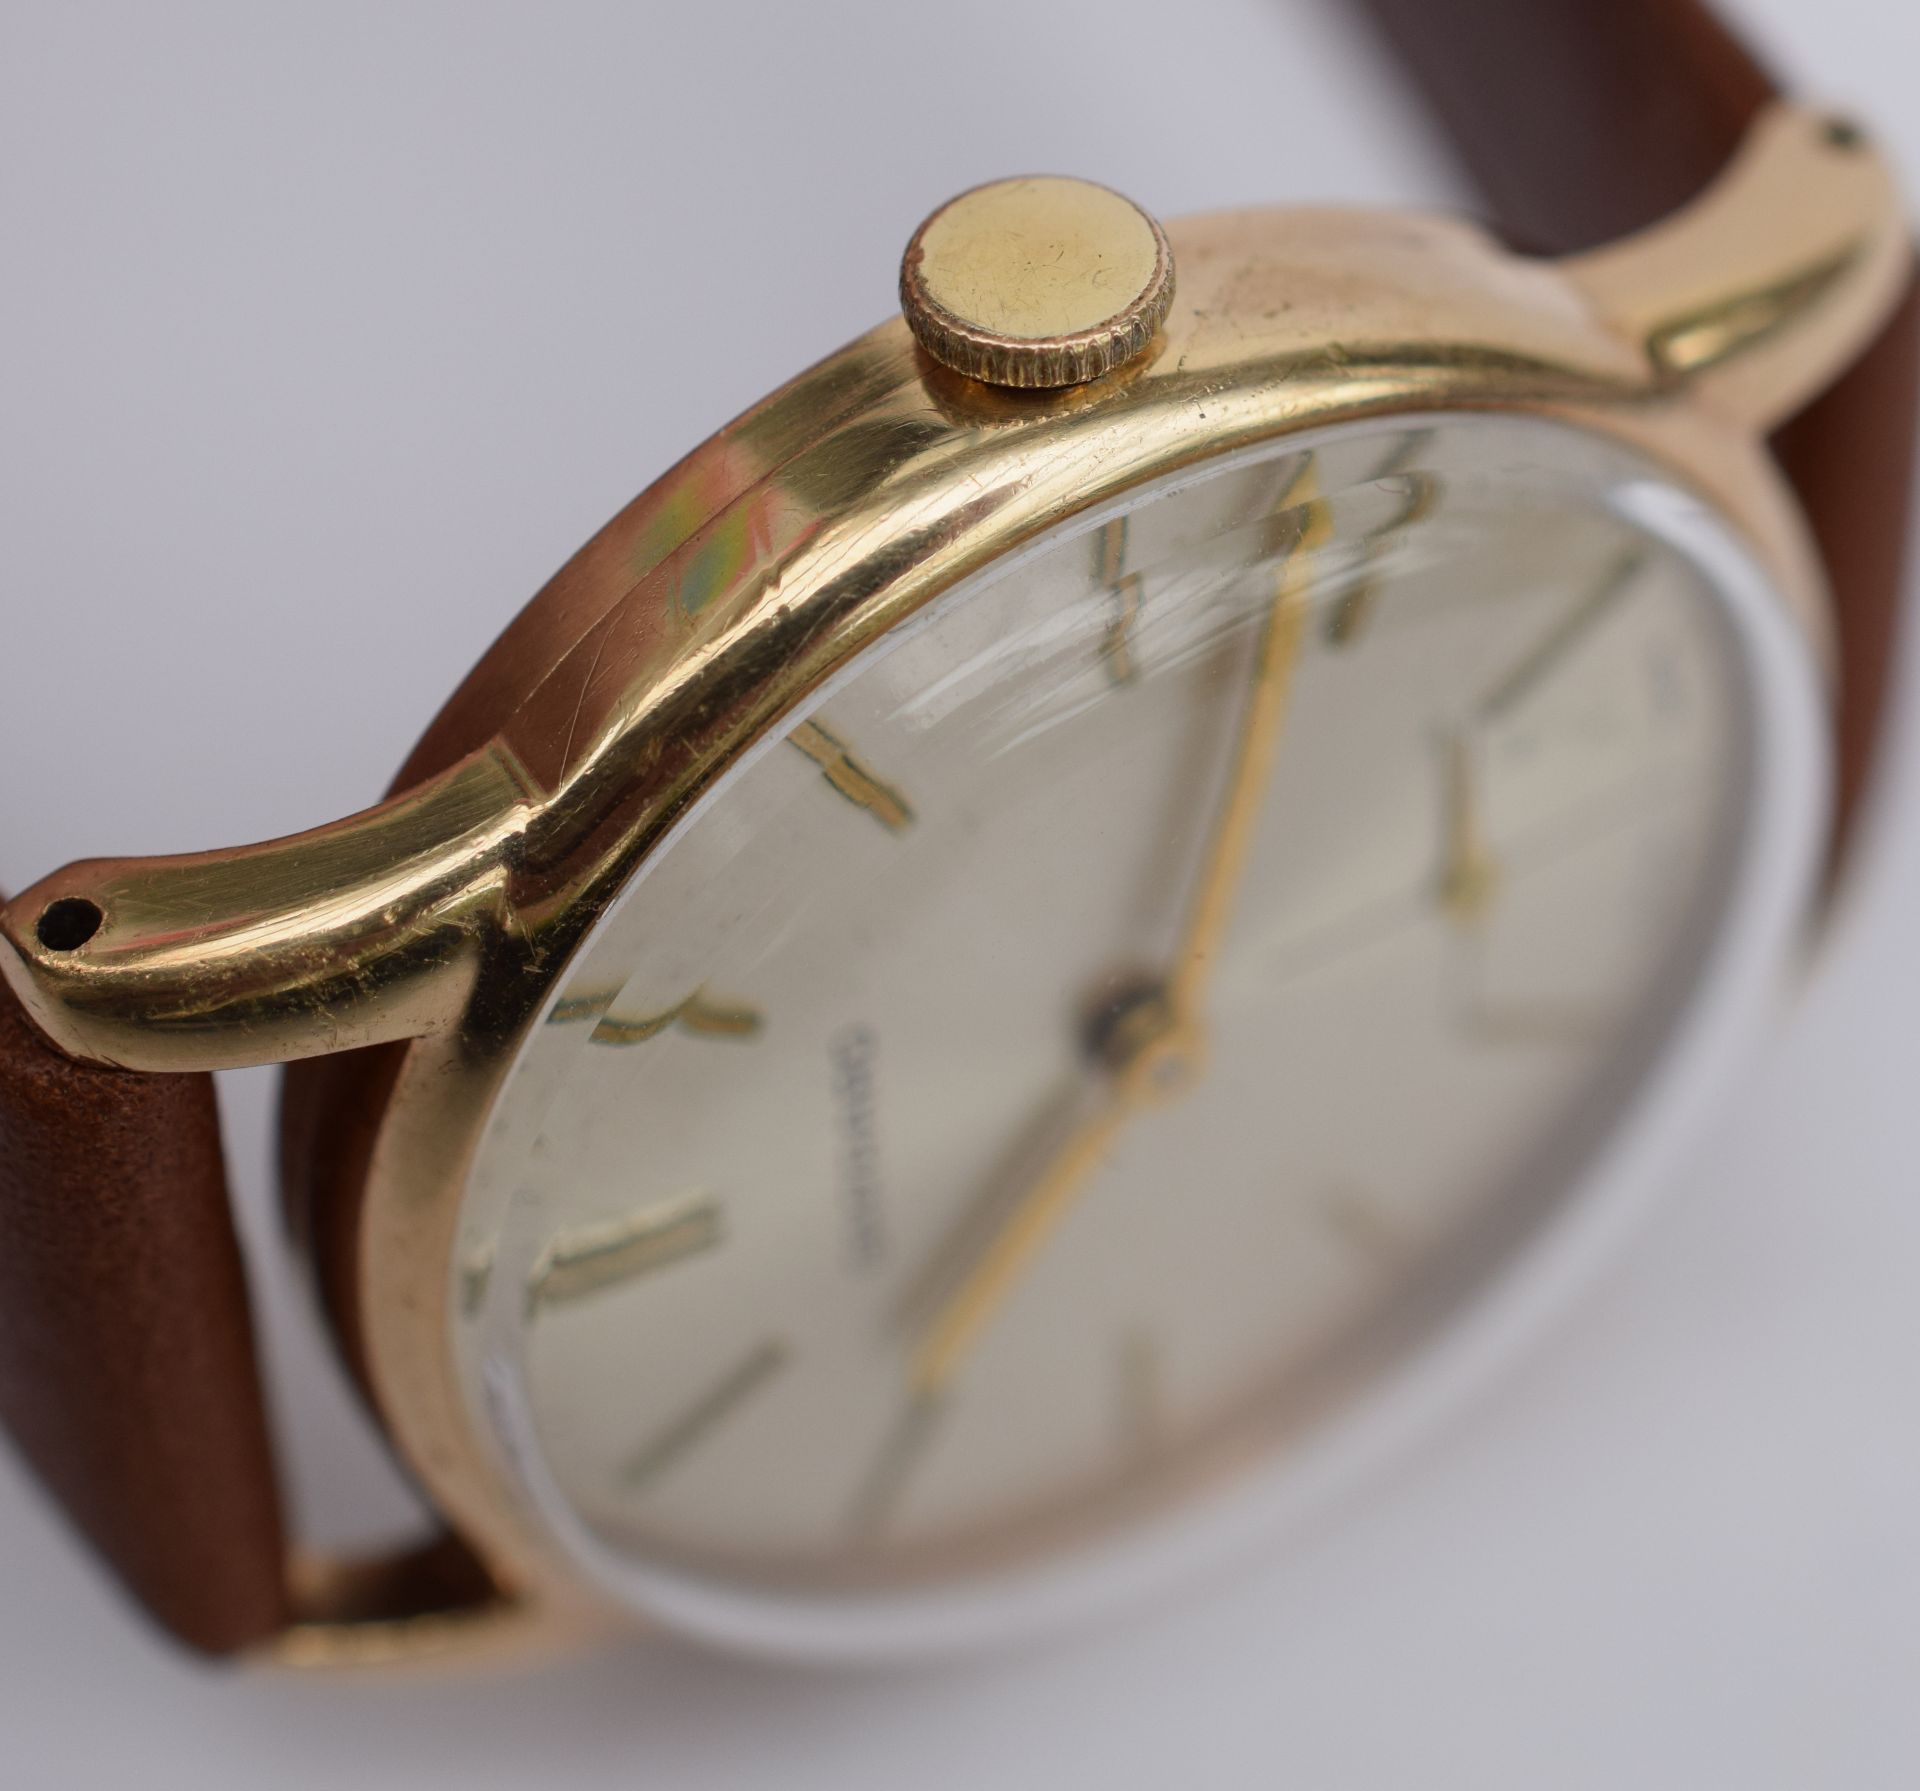 9ct Gold Garrard Gentleman's Manual Wind Wristwatch - Image 8 of 9